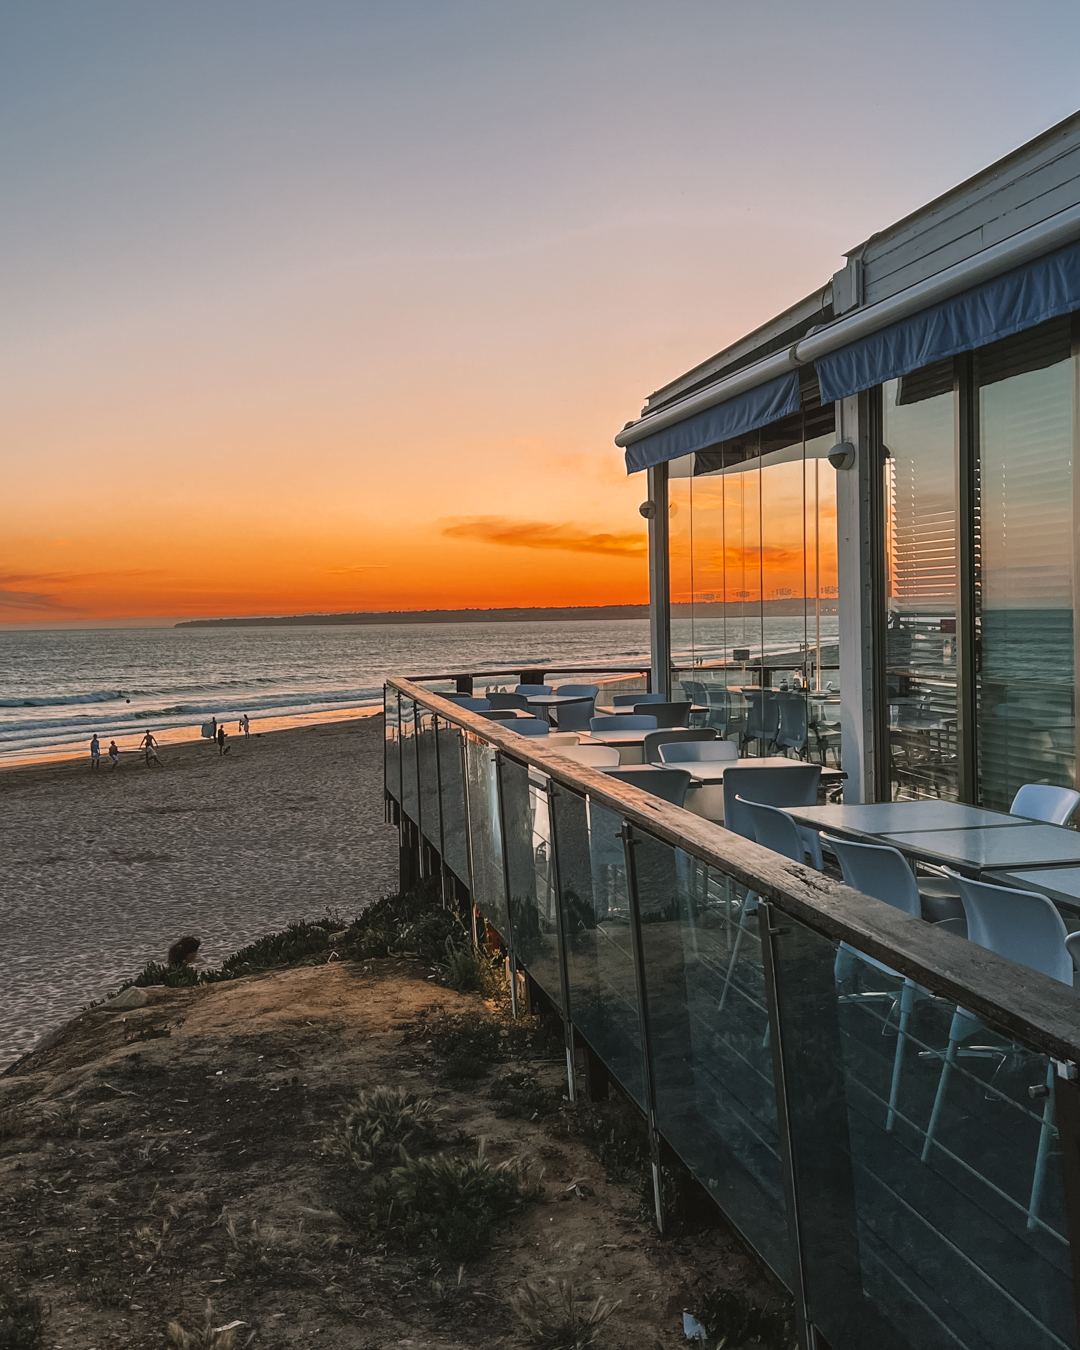 Sunset over Praia da Gale - Top spots to visit in the Algarve